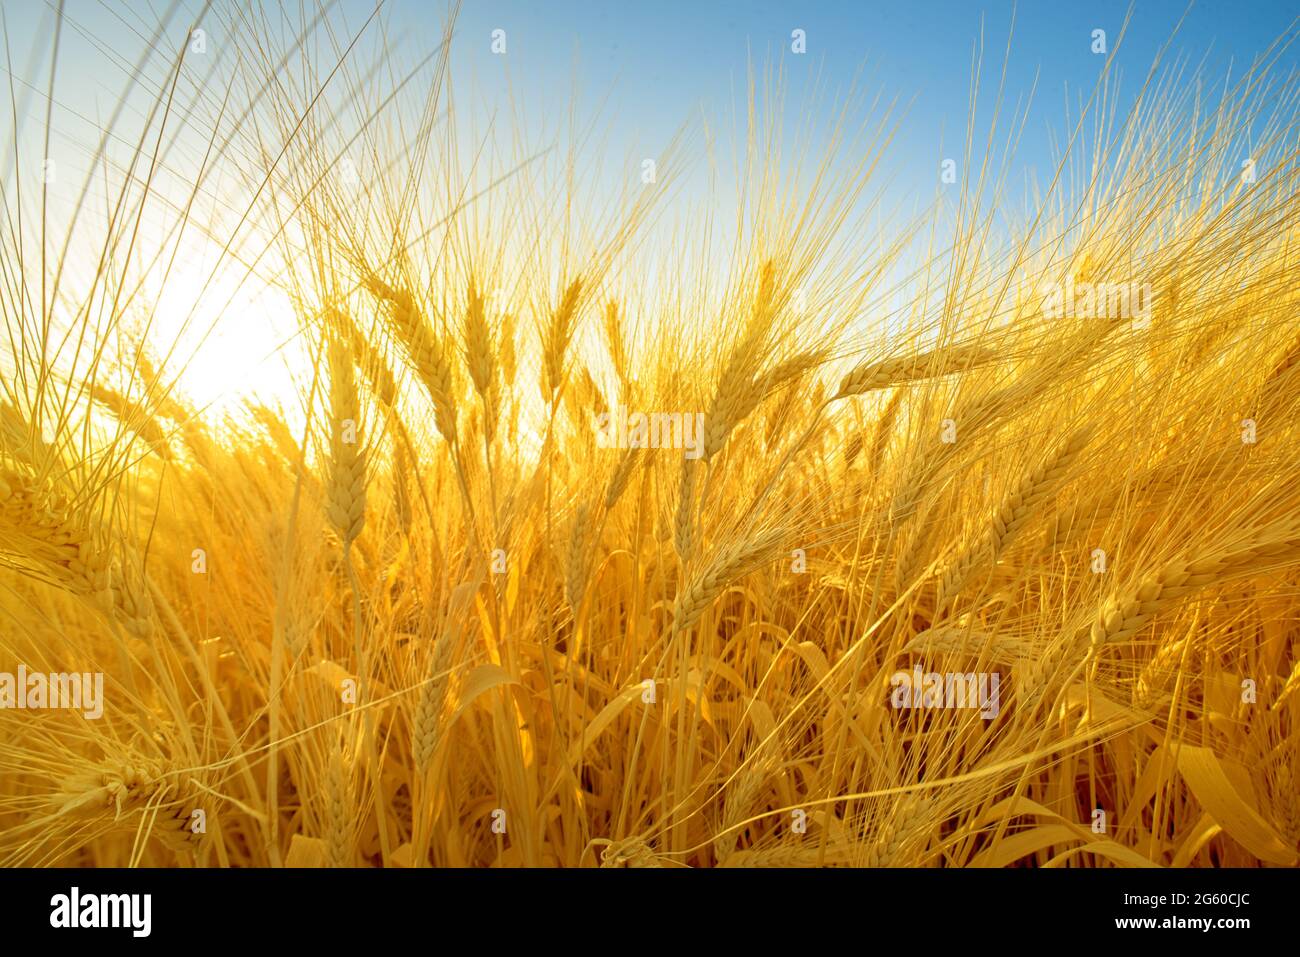 Ripe barley ears in a field, dramatic wide angle closeup Stock Photo